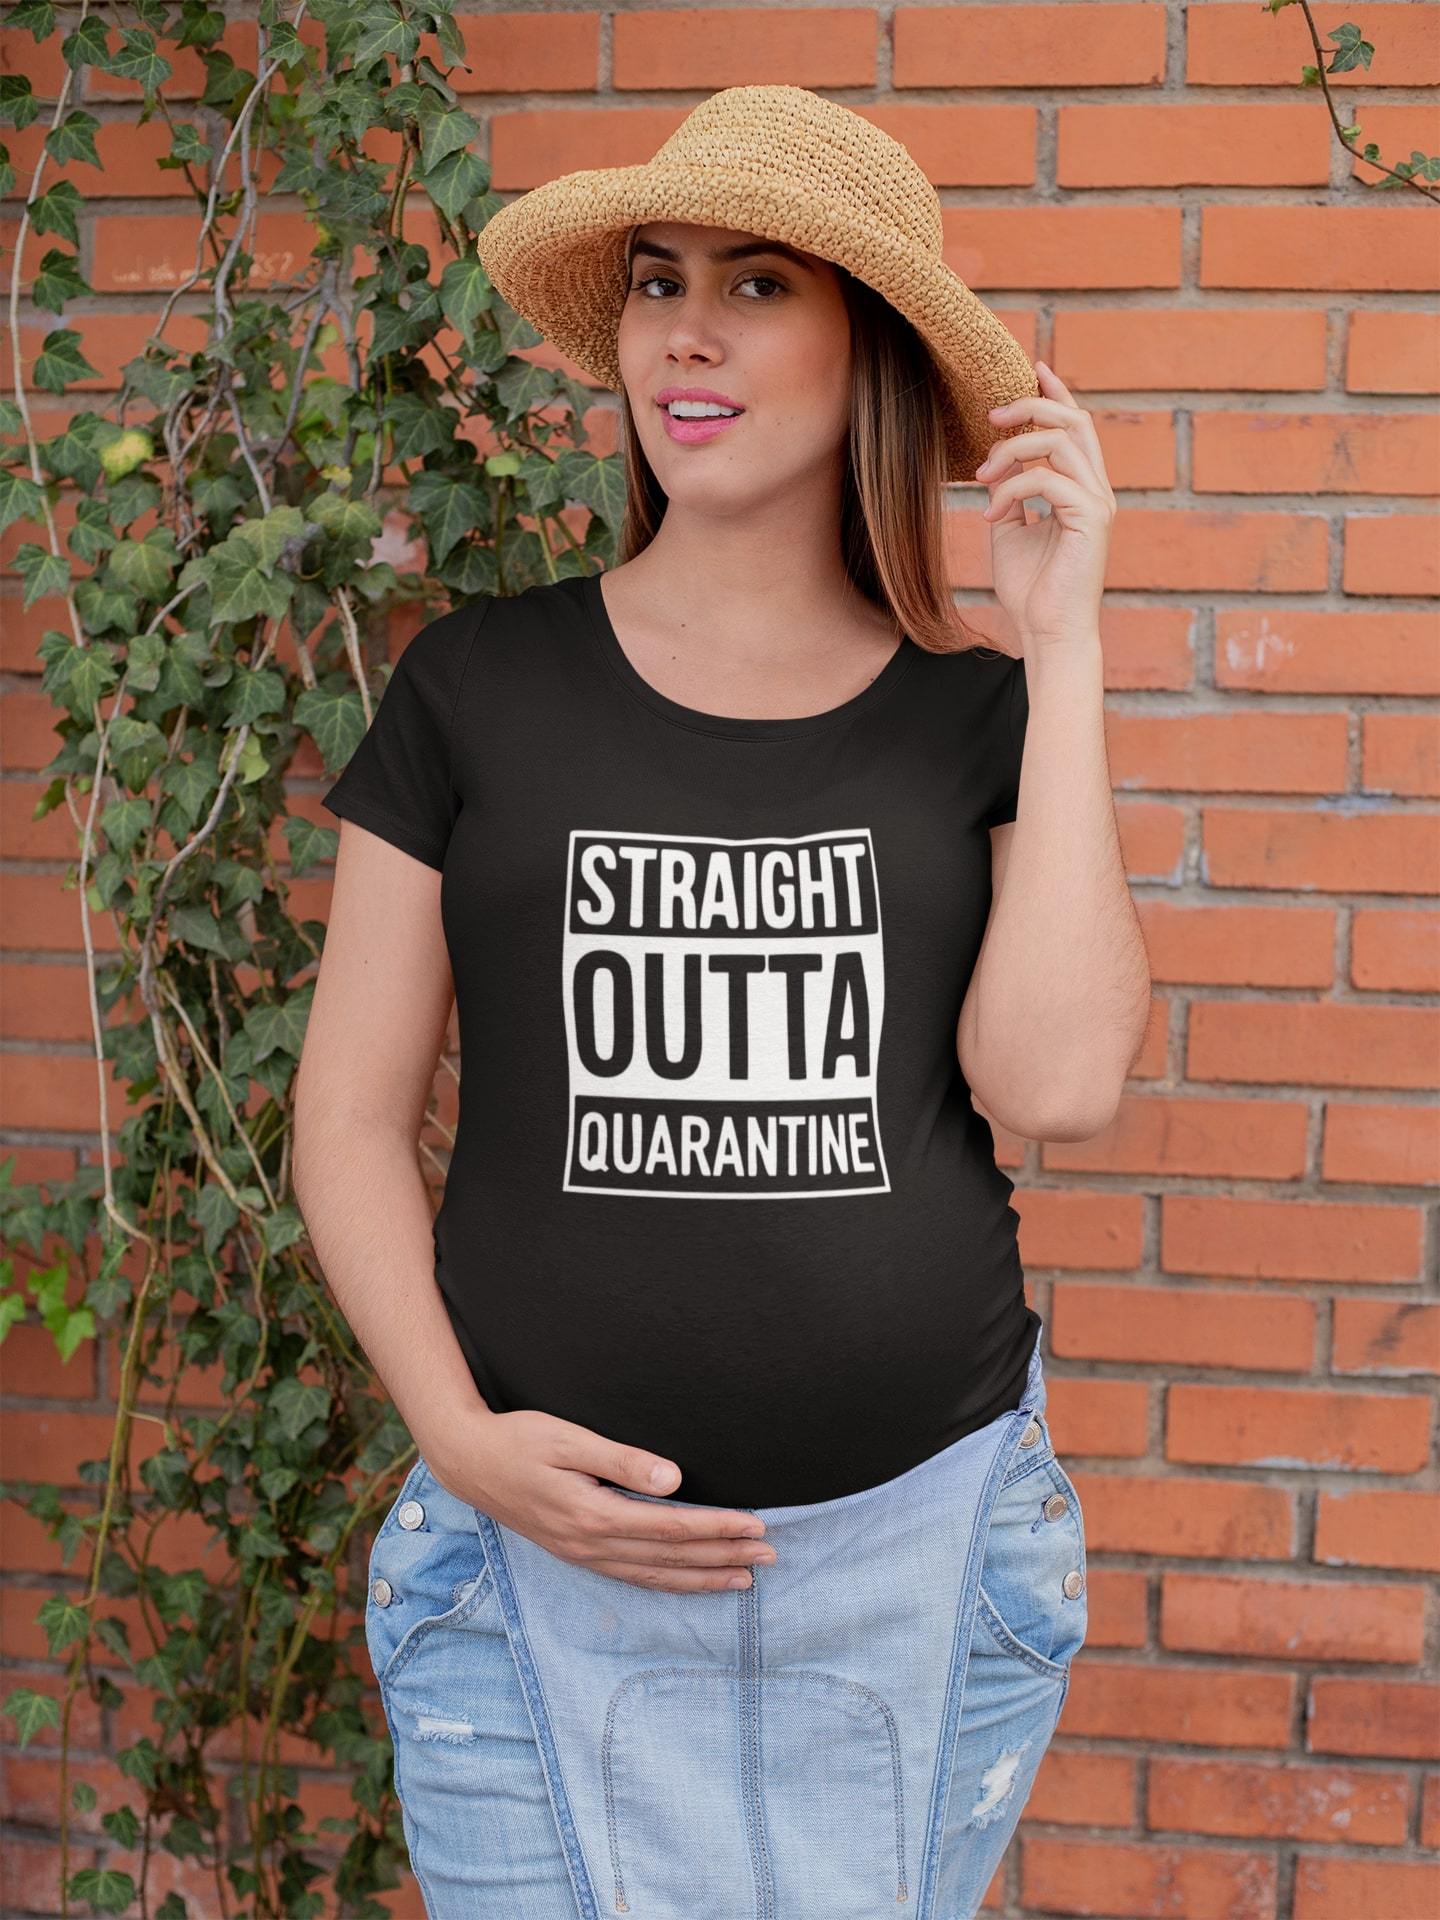 thelegalgang,Straight Outta Quarantine Graphic Maternity T shirt,WOMEN.